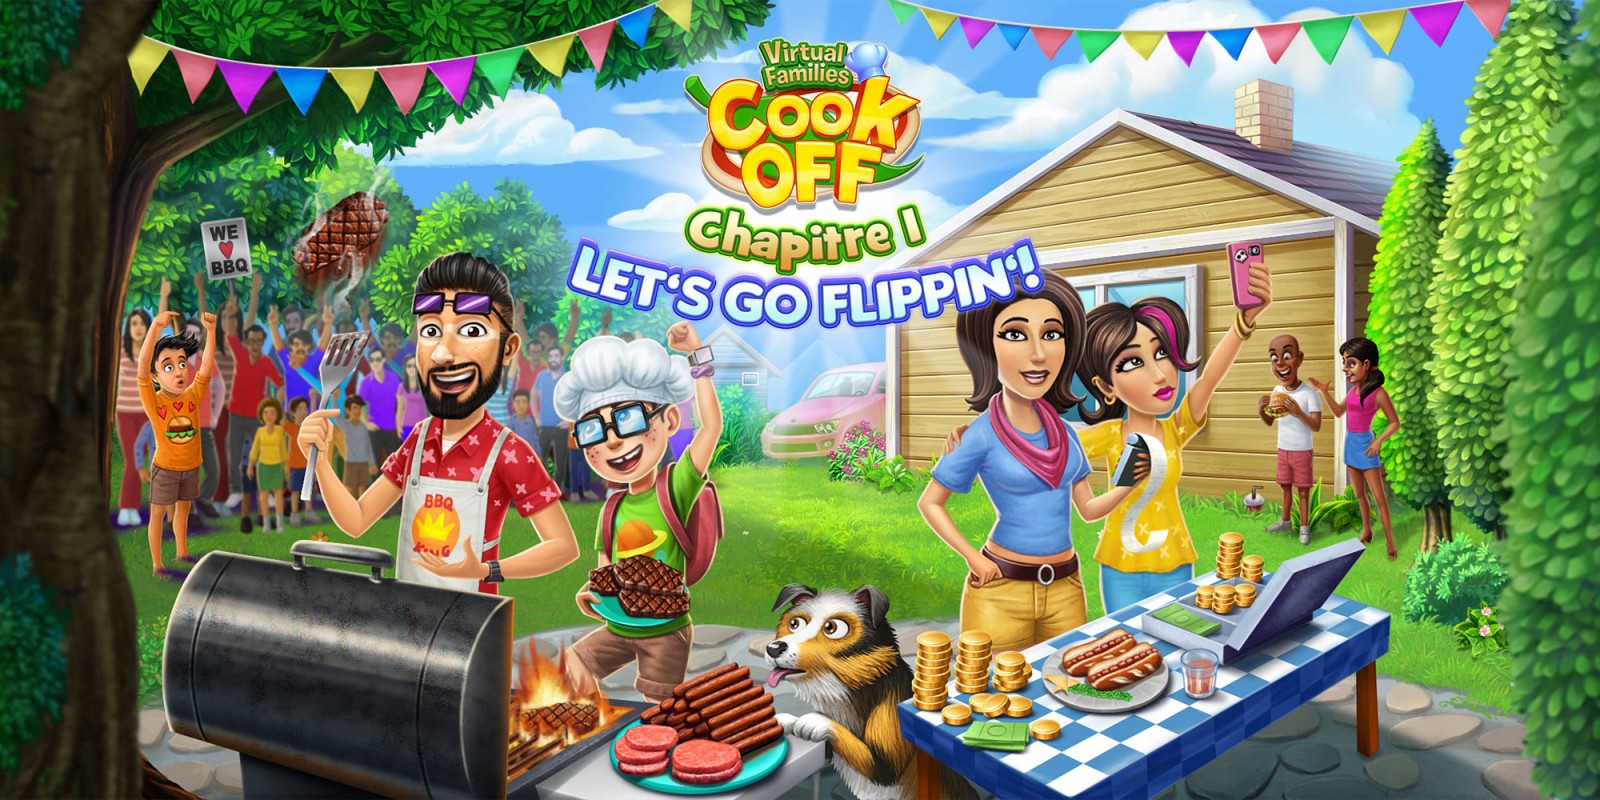 Virtual Families Cook Off: Chapitre 1 Let's Go Flippin'